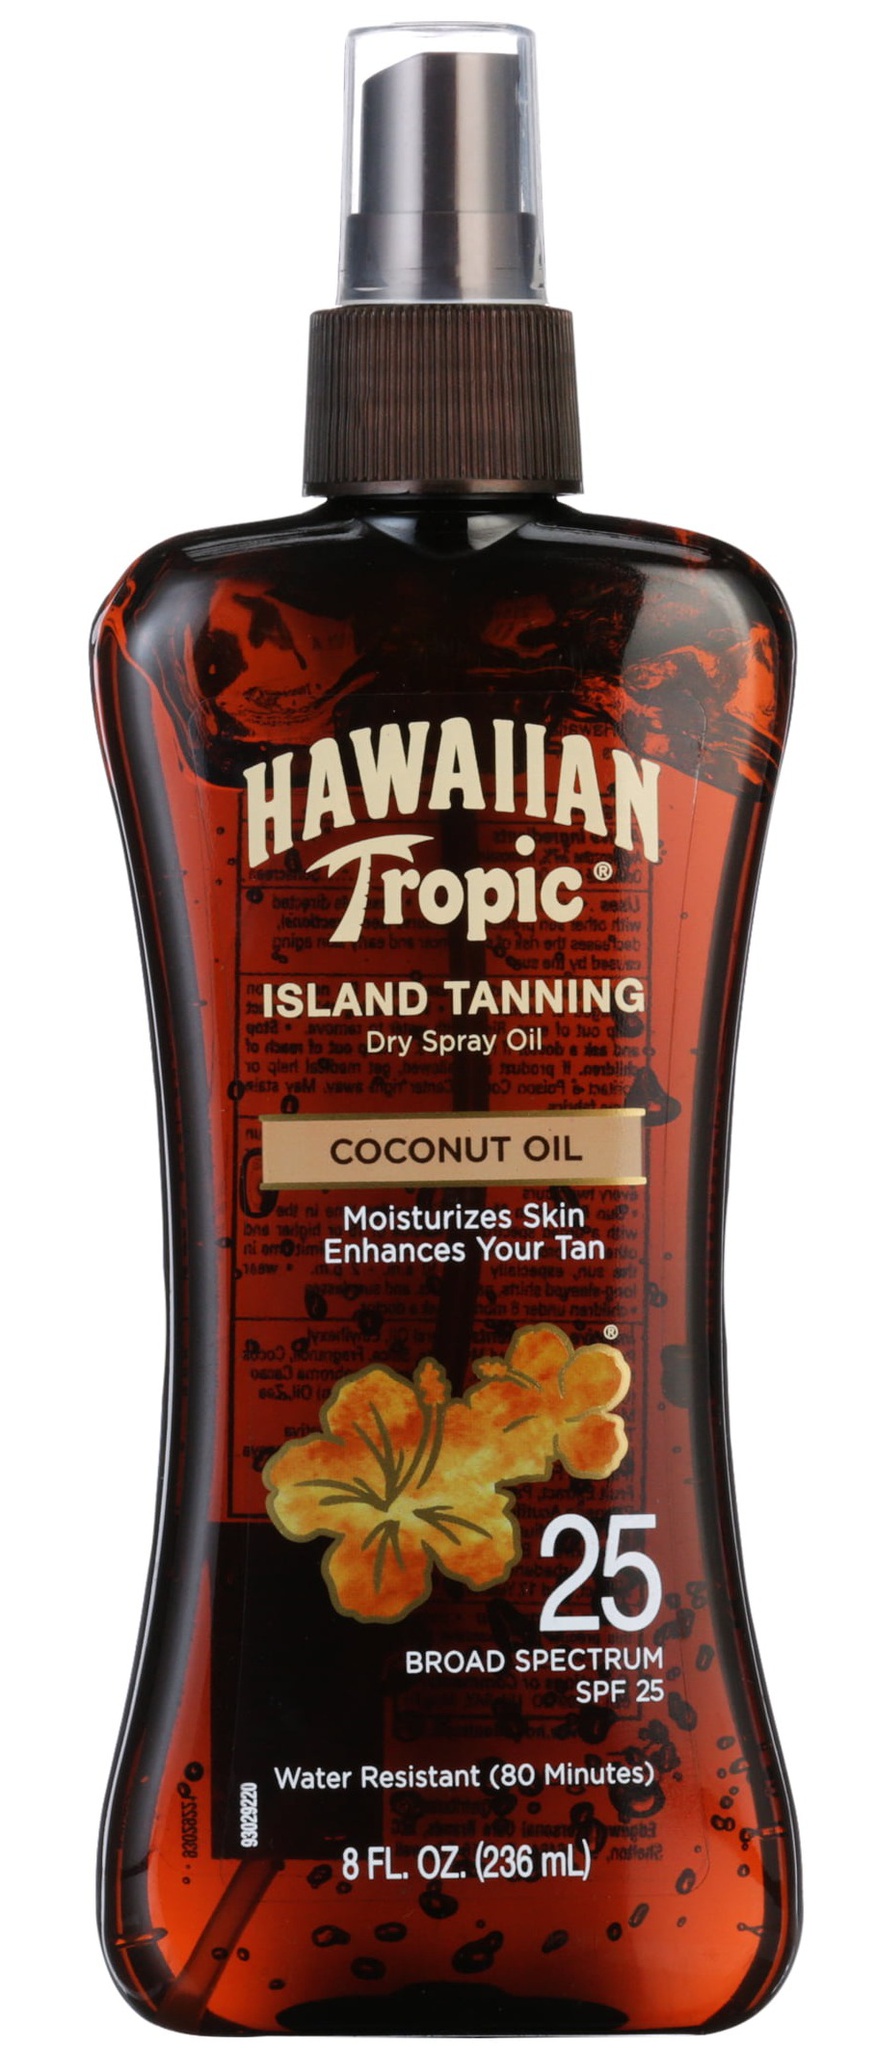 Hawaiian Tropic Island Tanning Dry Spray Oil SPF 25